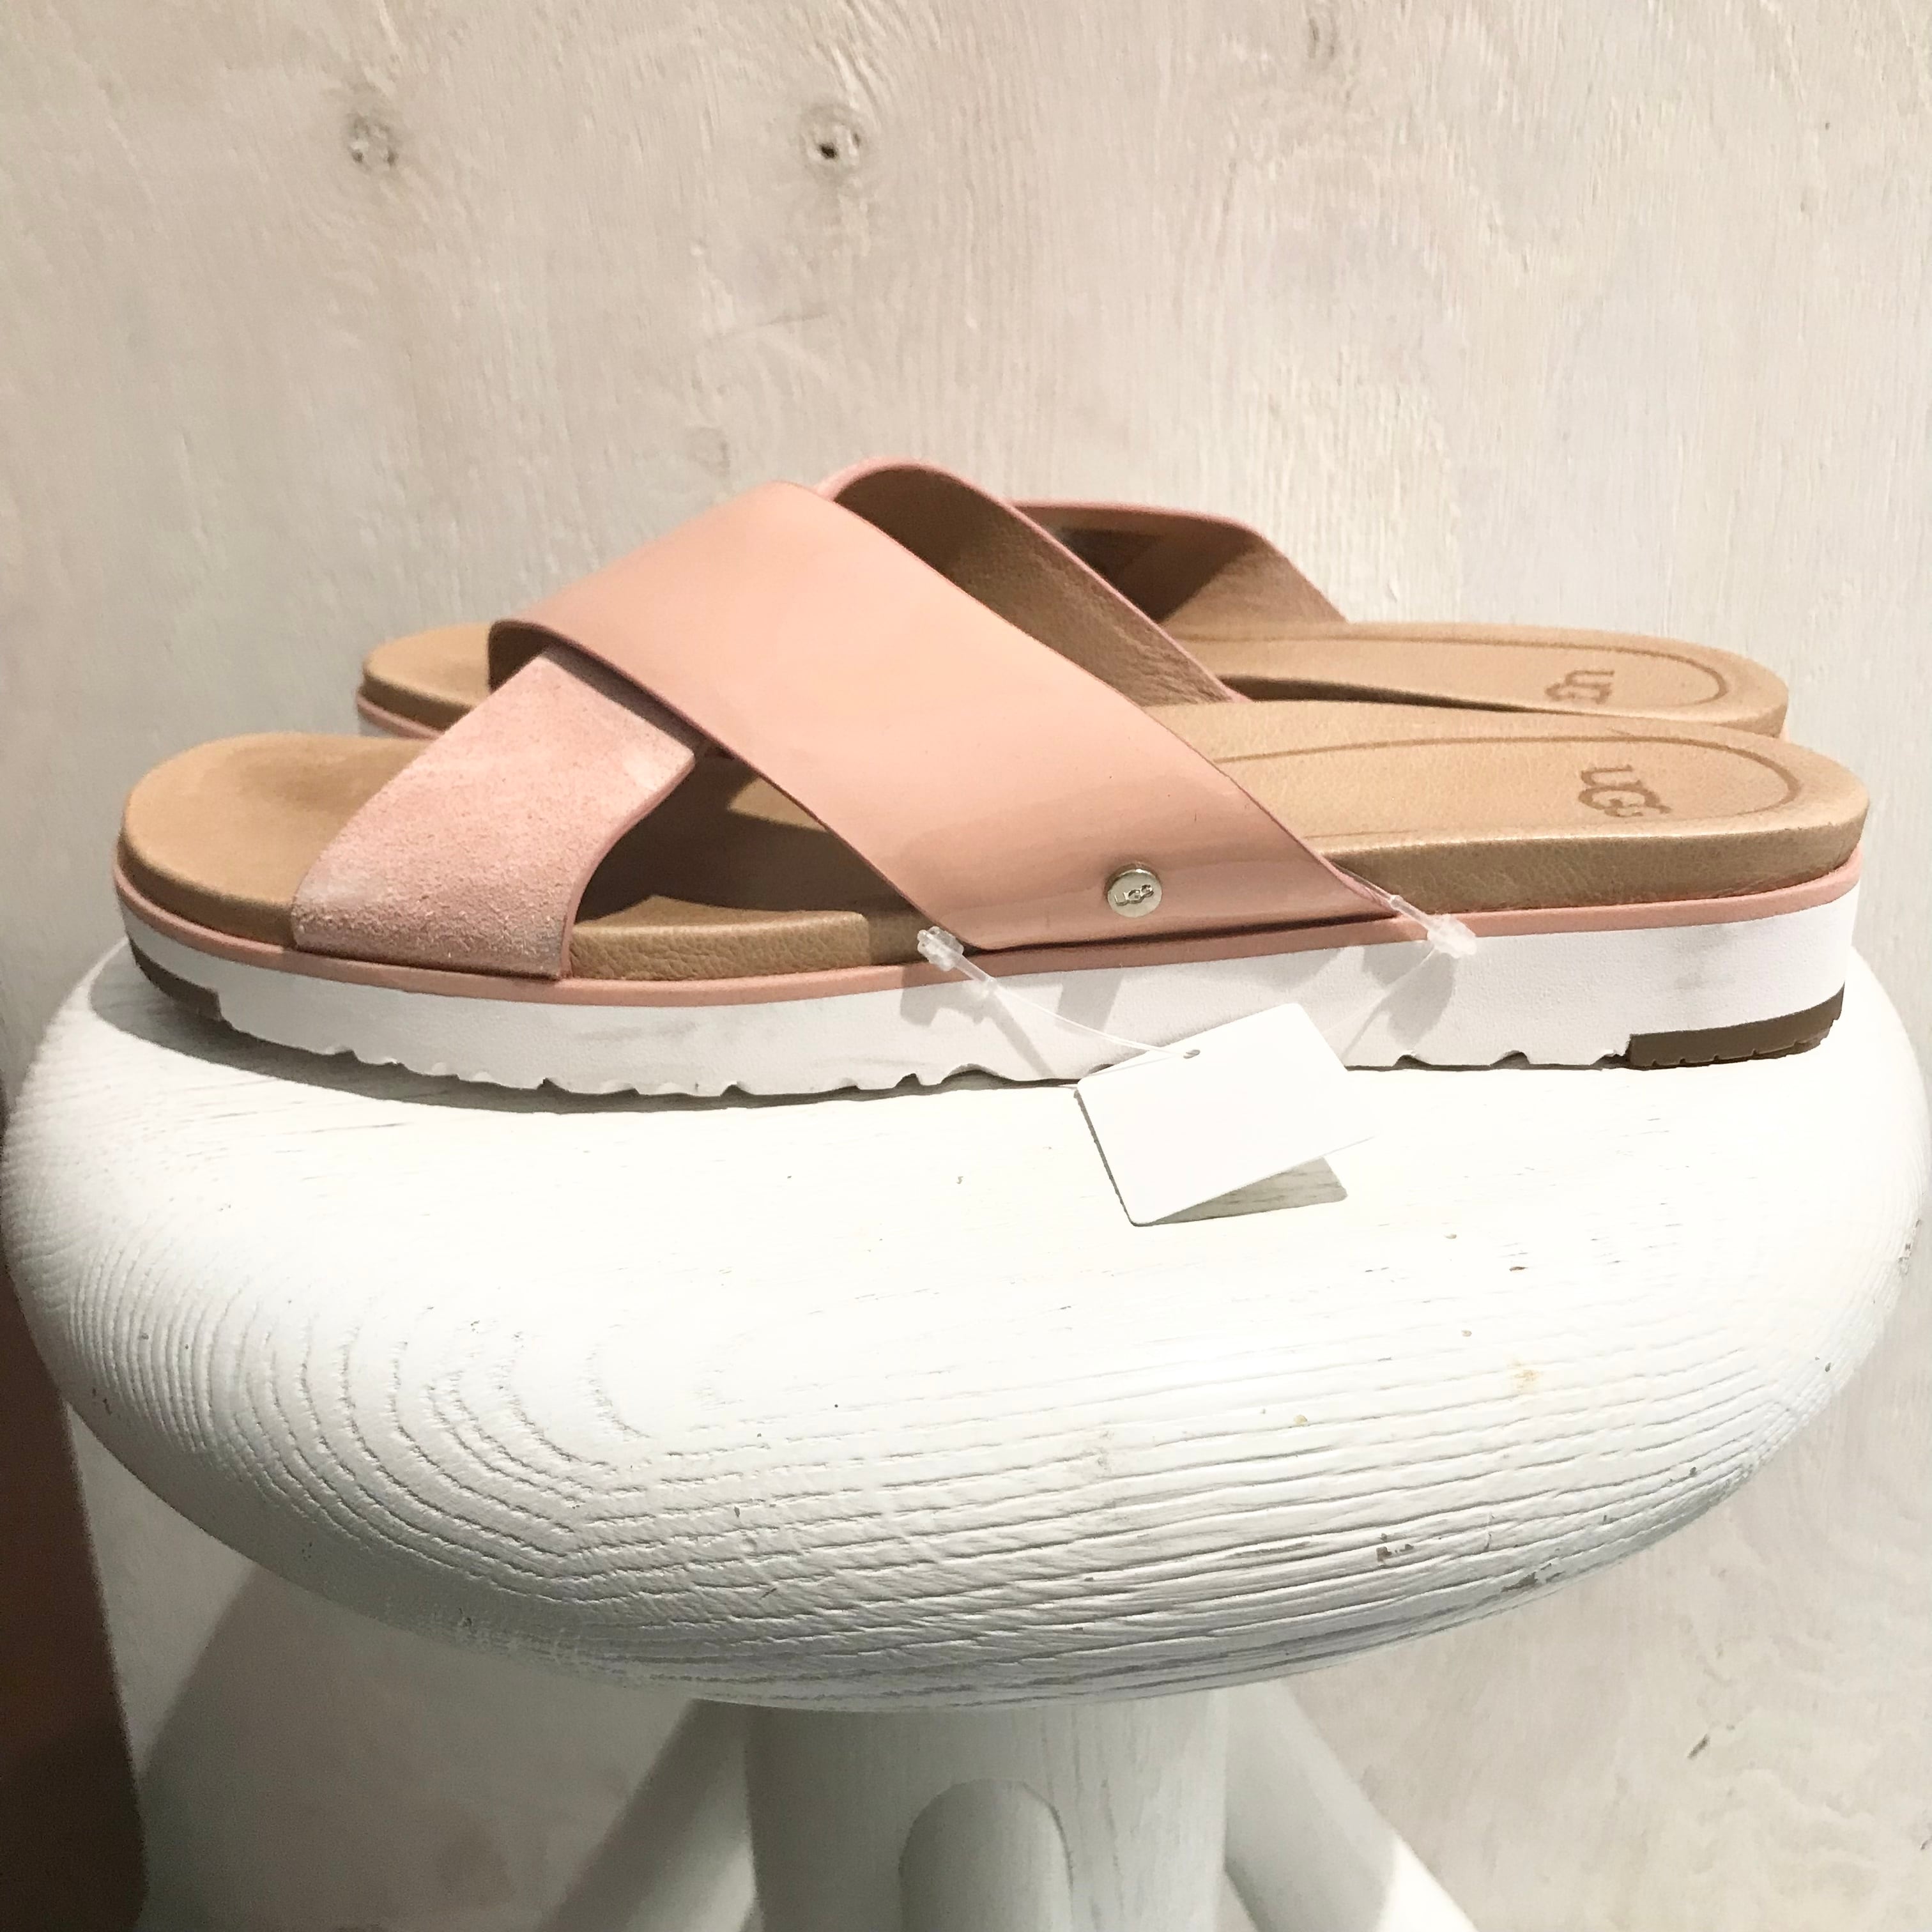 UGG/sandal/pink/8.5/アグ/サンダル/ピンク/サーモンピンク/25.5cm